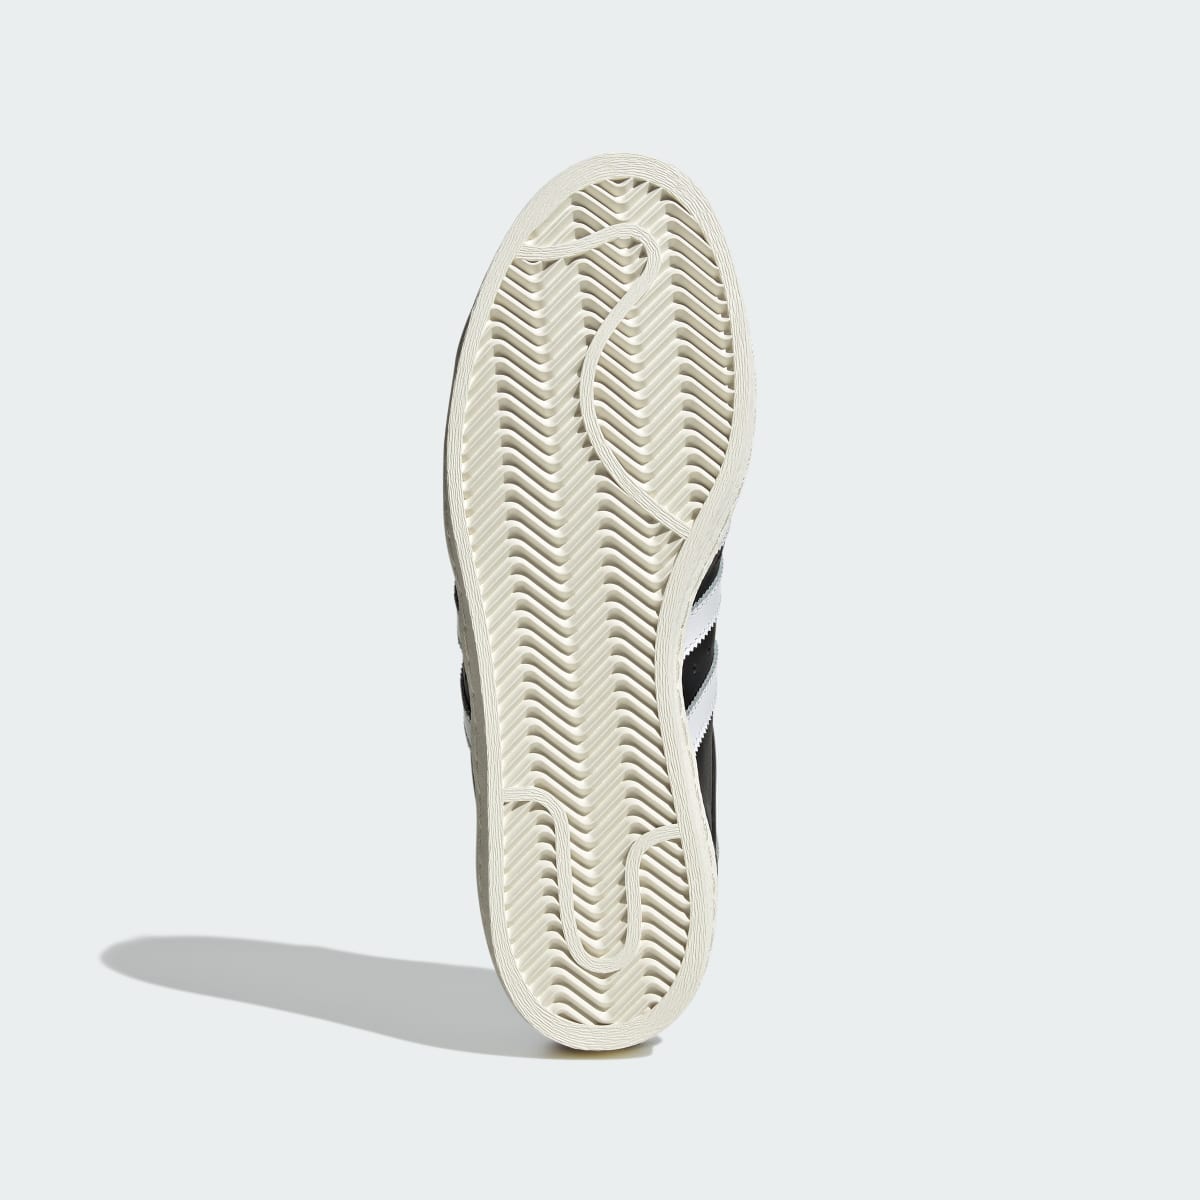 Adidas Superstar 82 Shoes. 4